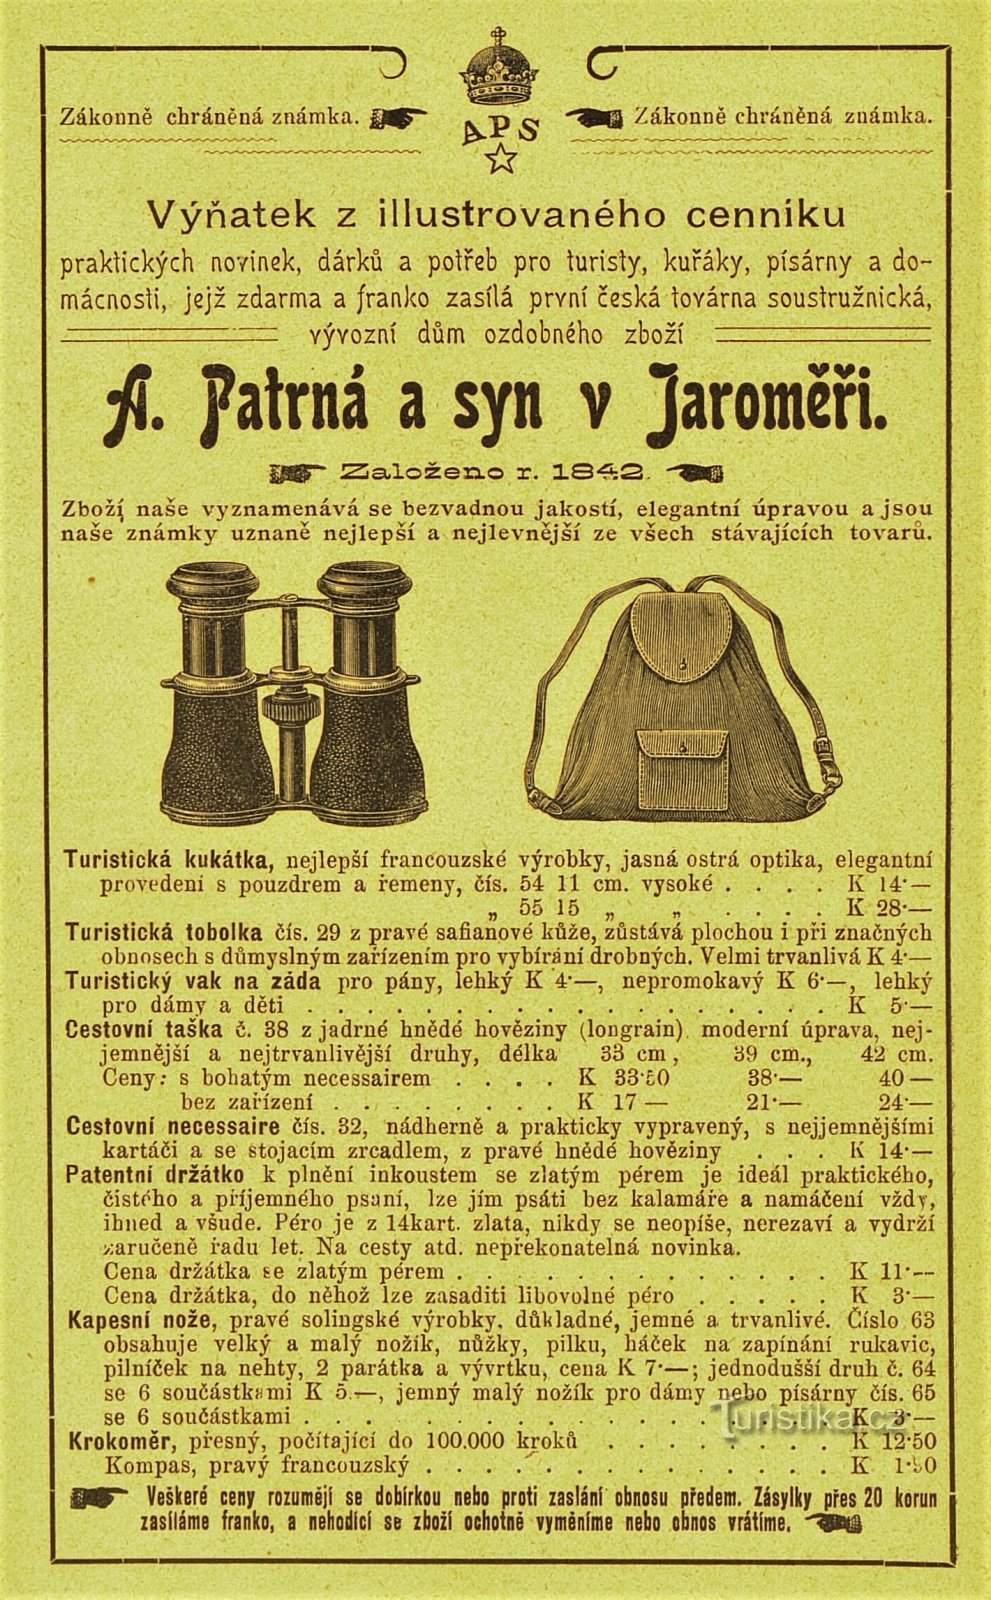 Współczesna reklama firmy A. Patrná i syn w Jaroměřu (1902)